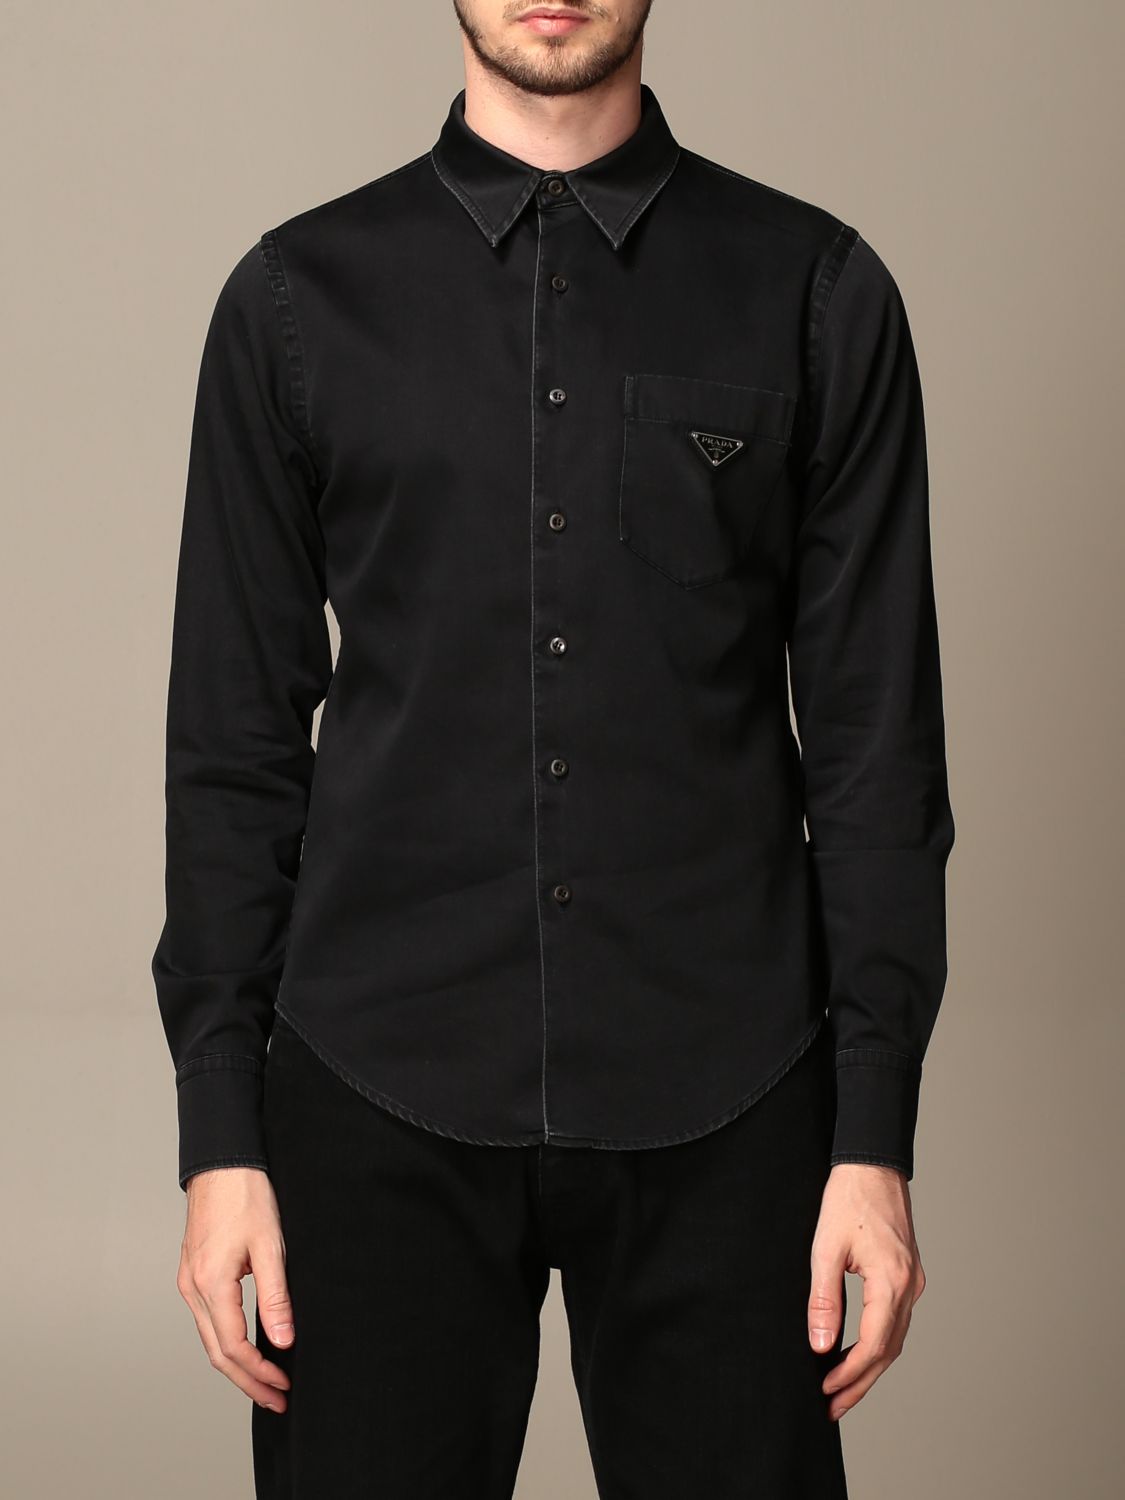 PRADA: shirt with triangular logo - Black | Prada shirt GEC063 1T7L online  on 